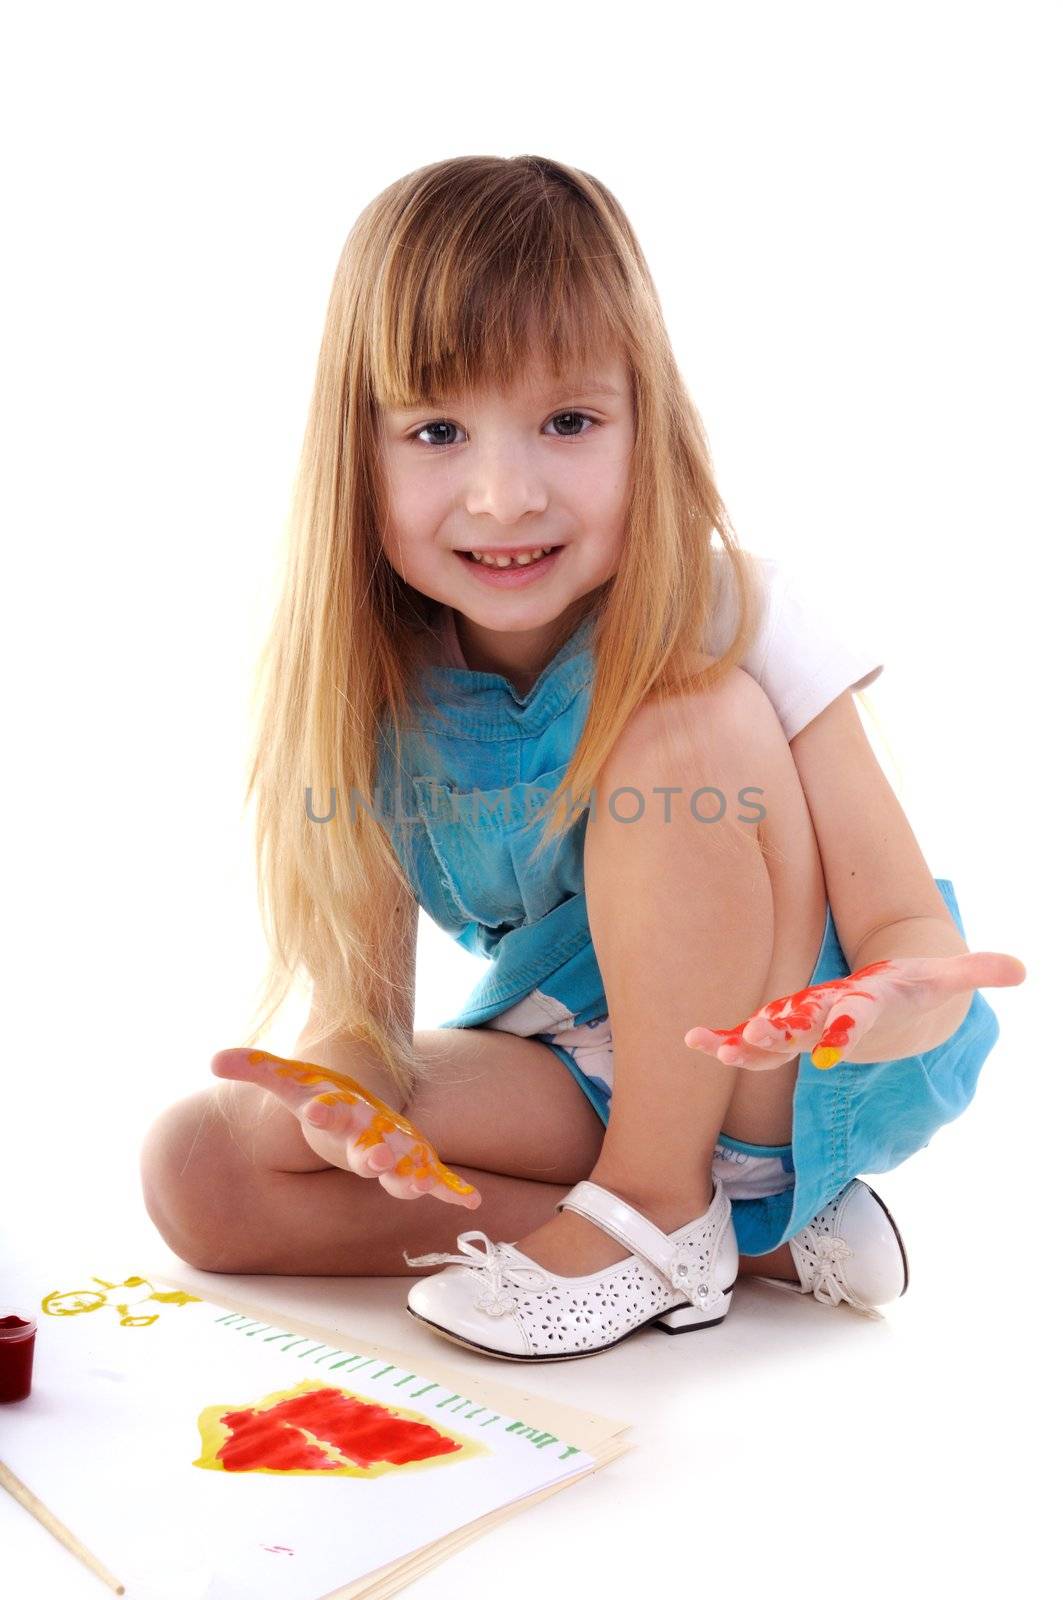 Playful beauty girl with many-coloured hands by iryna_rasko